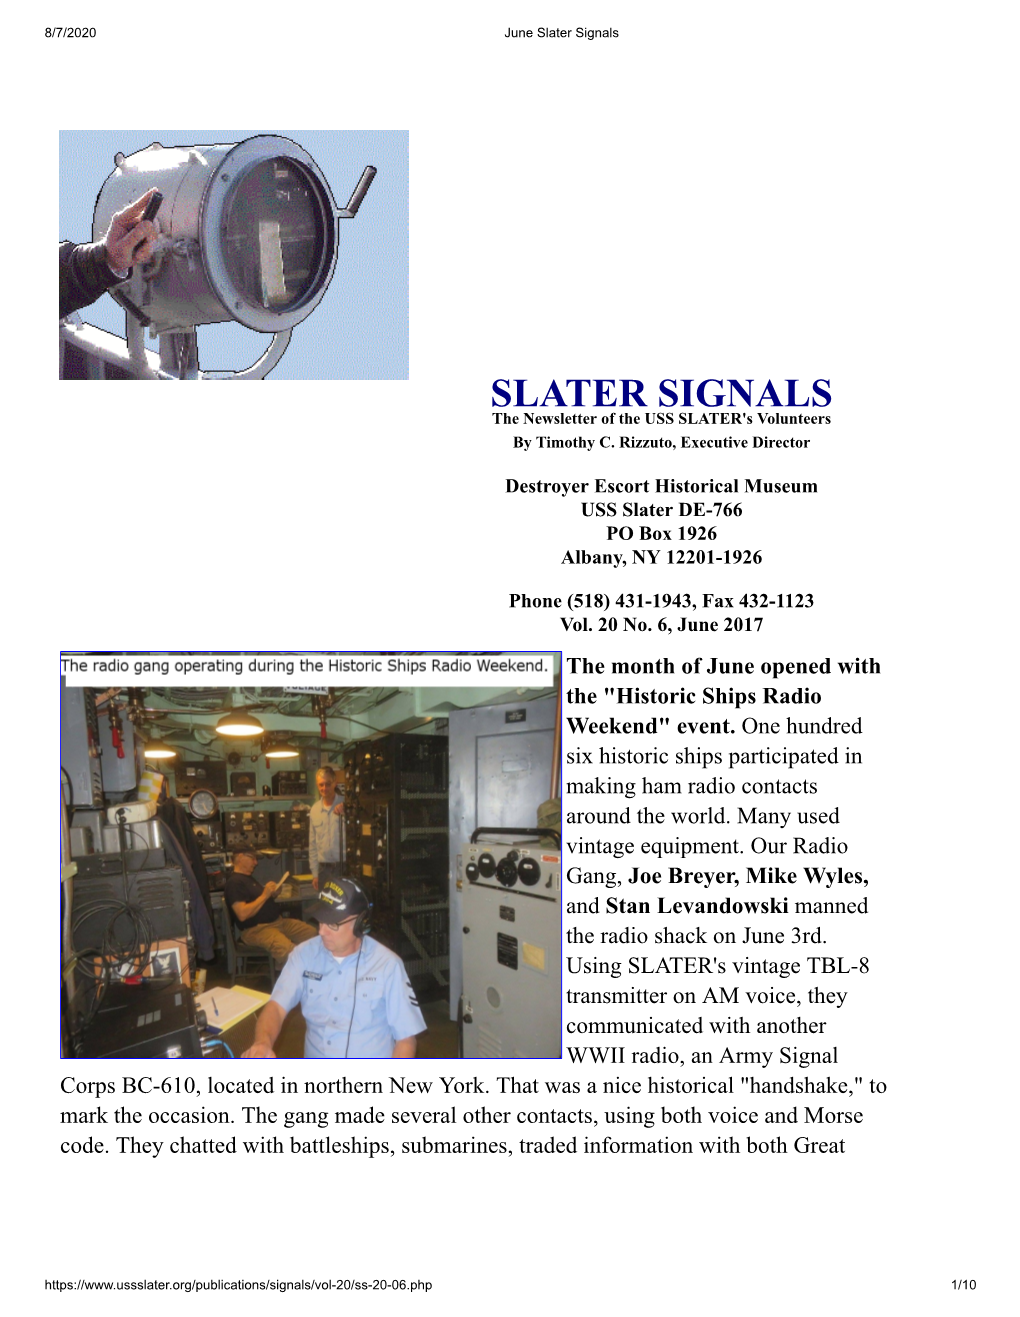 Slater Signals